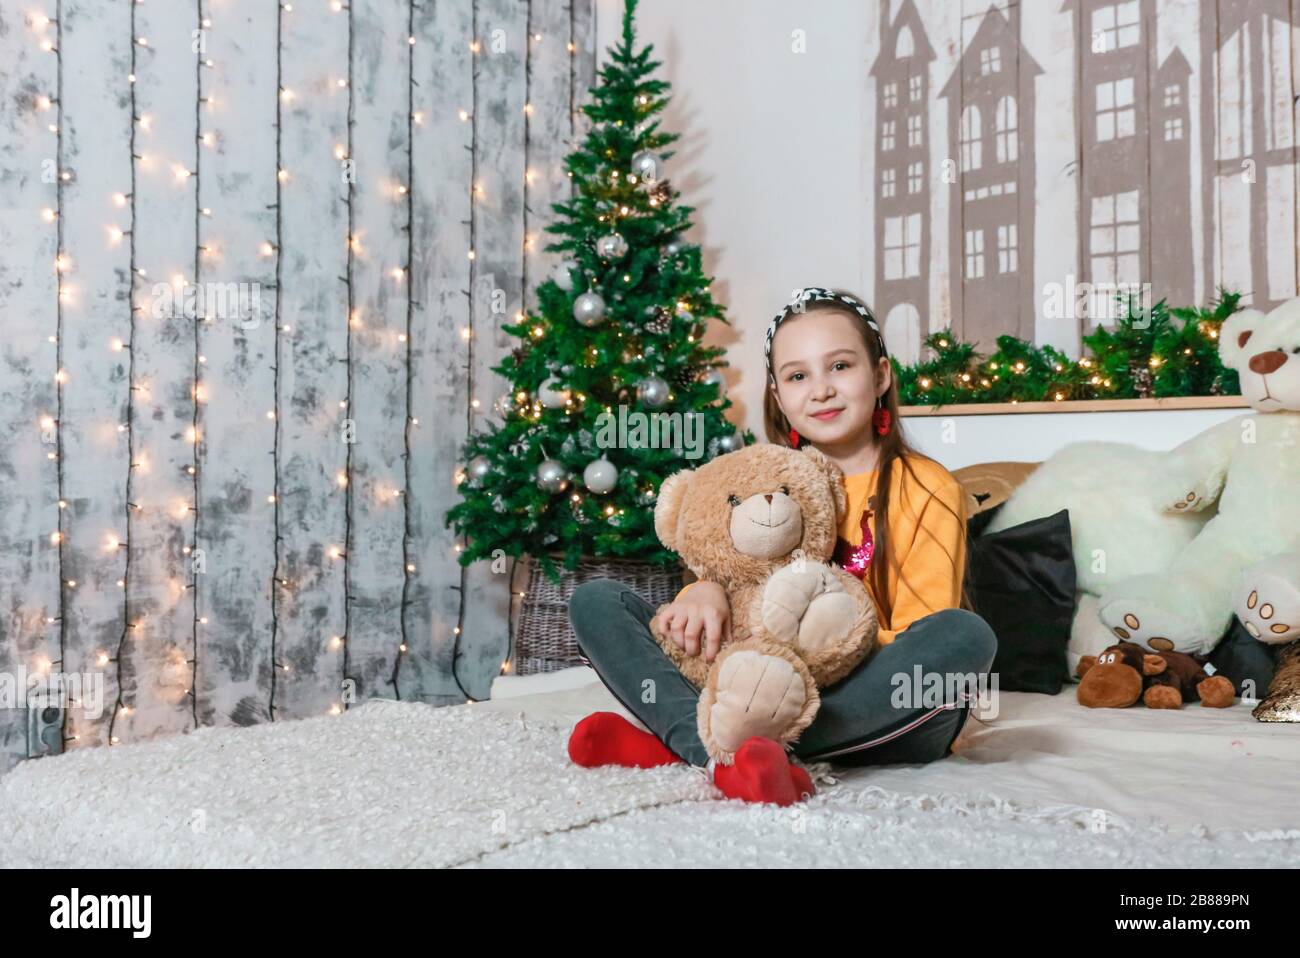 little girl hug bear at christmas photo Stock Photo